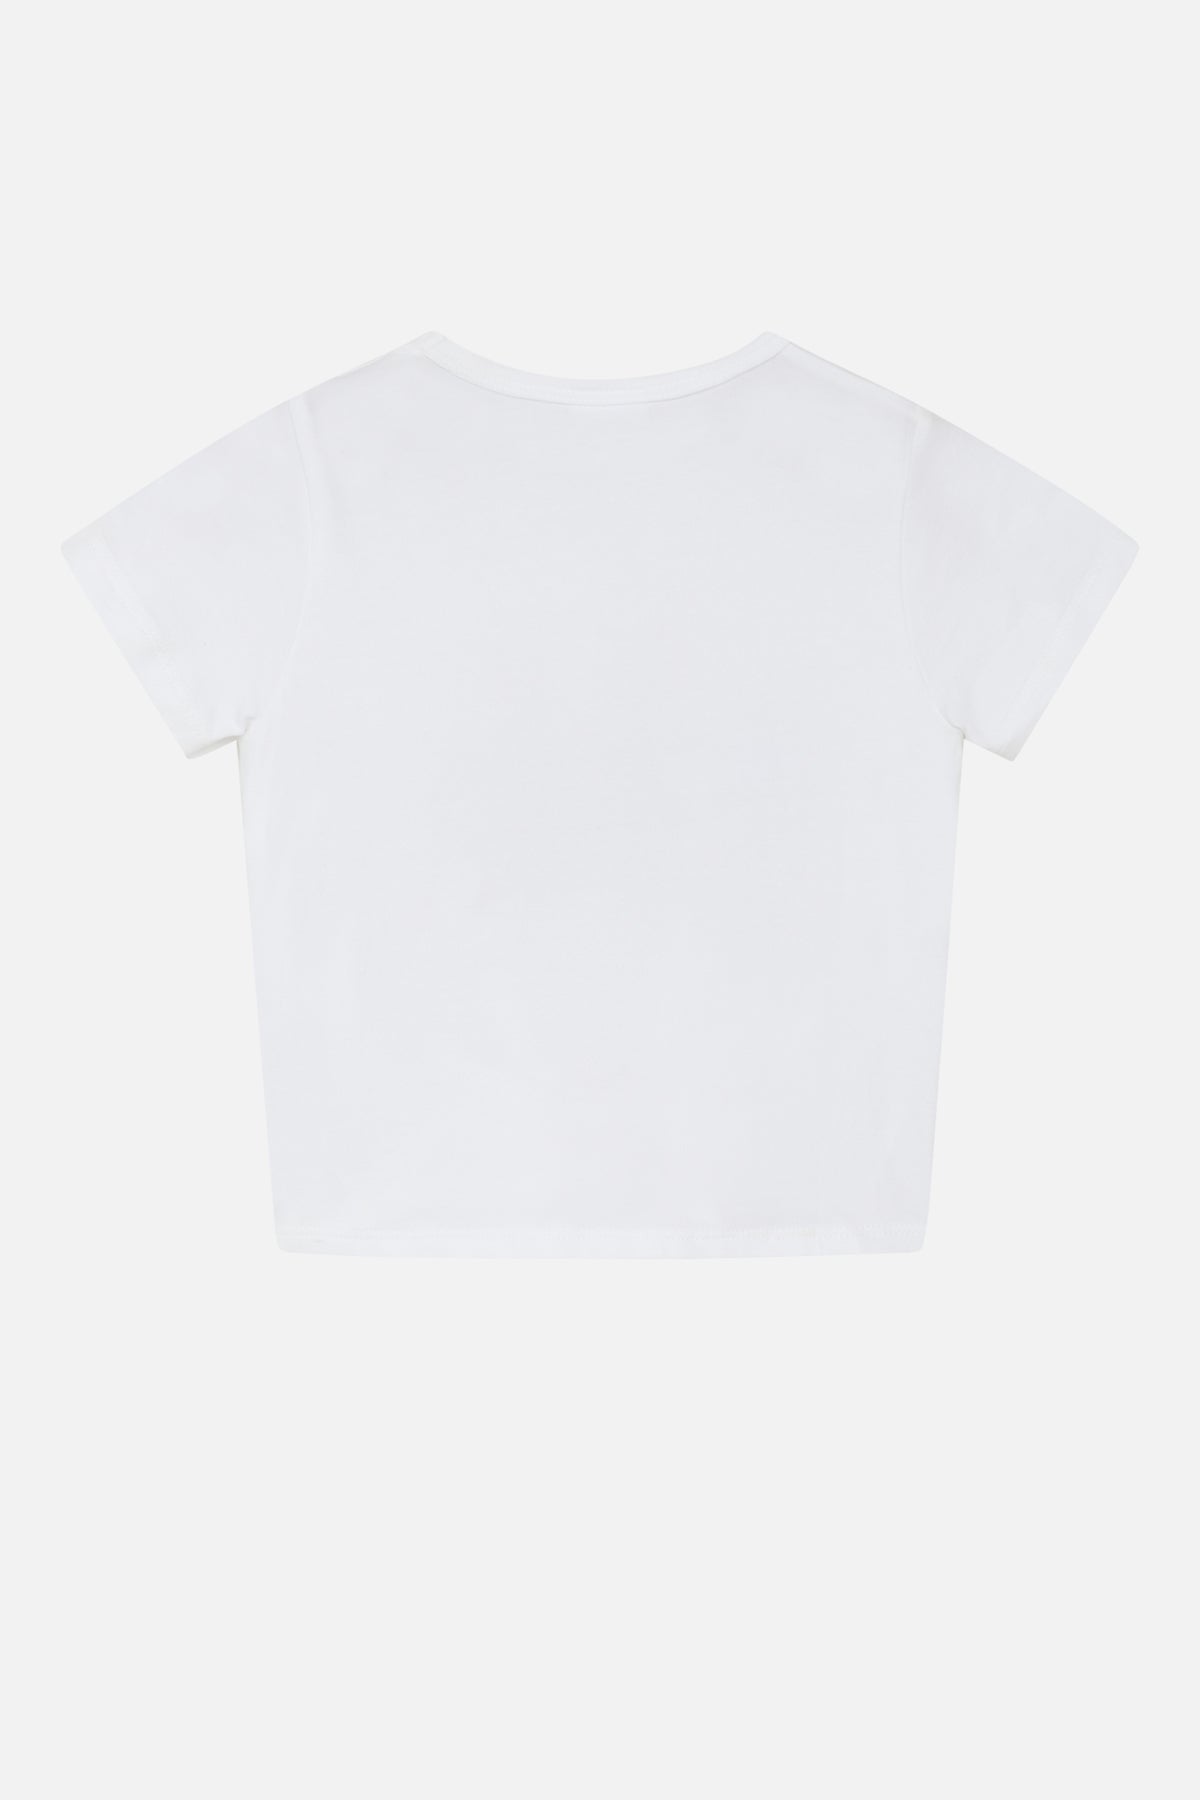 Hust & Claire - Alexie-HC-T-Shirt - White